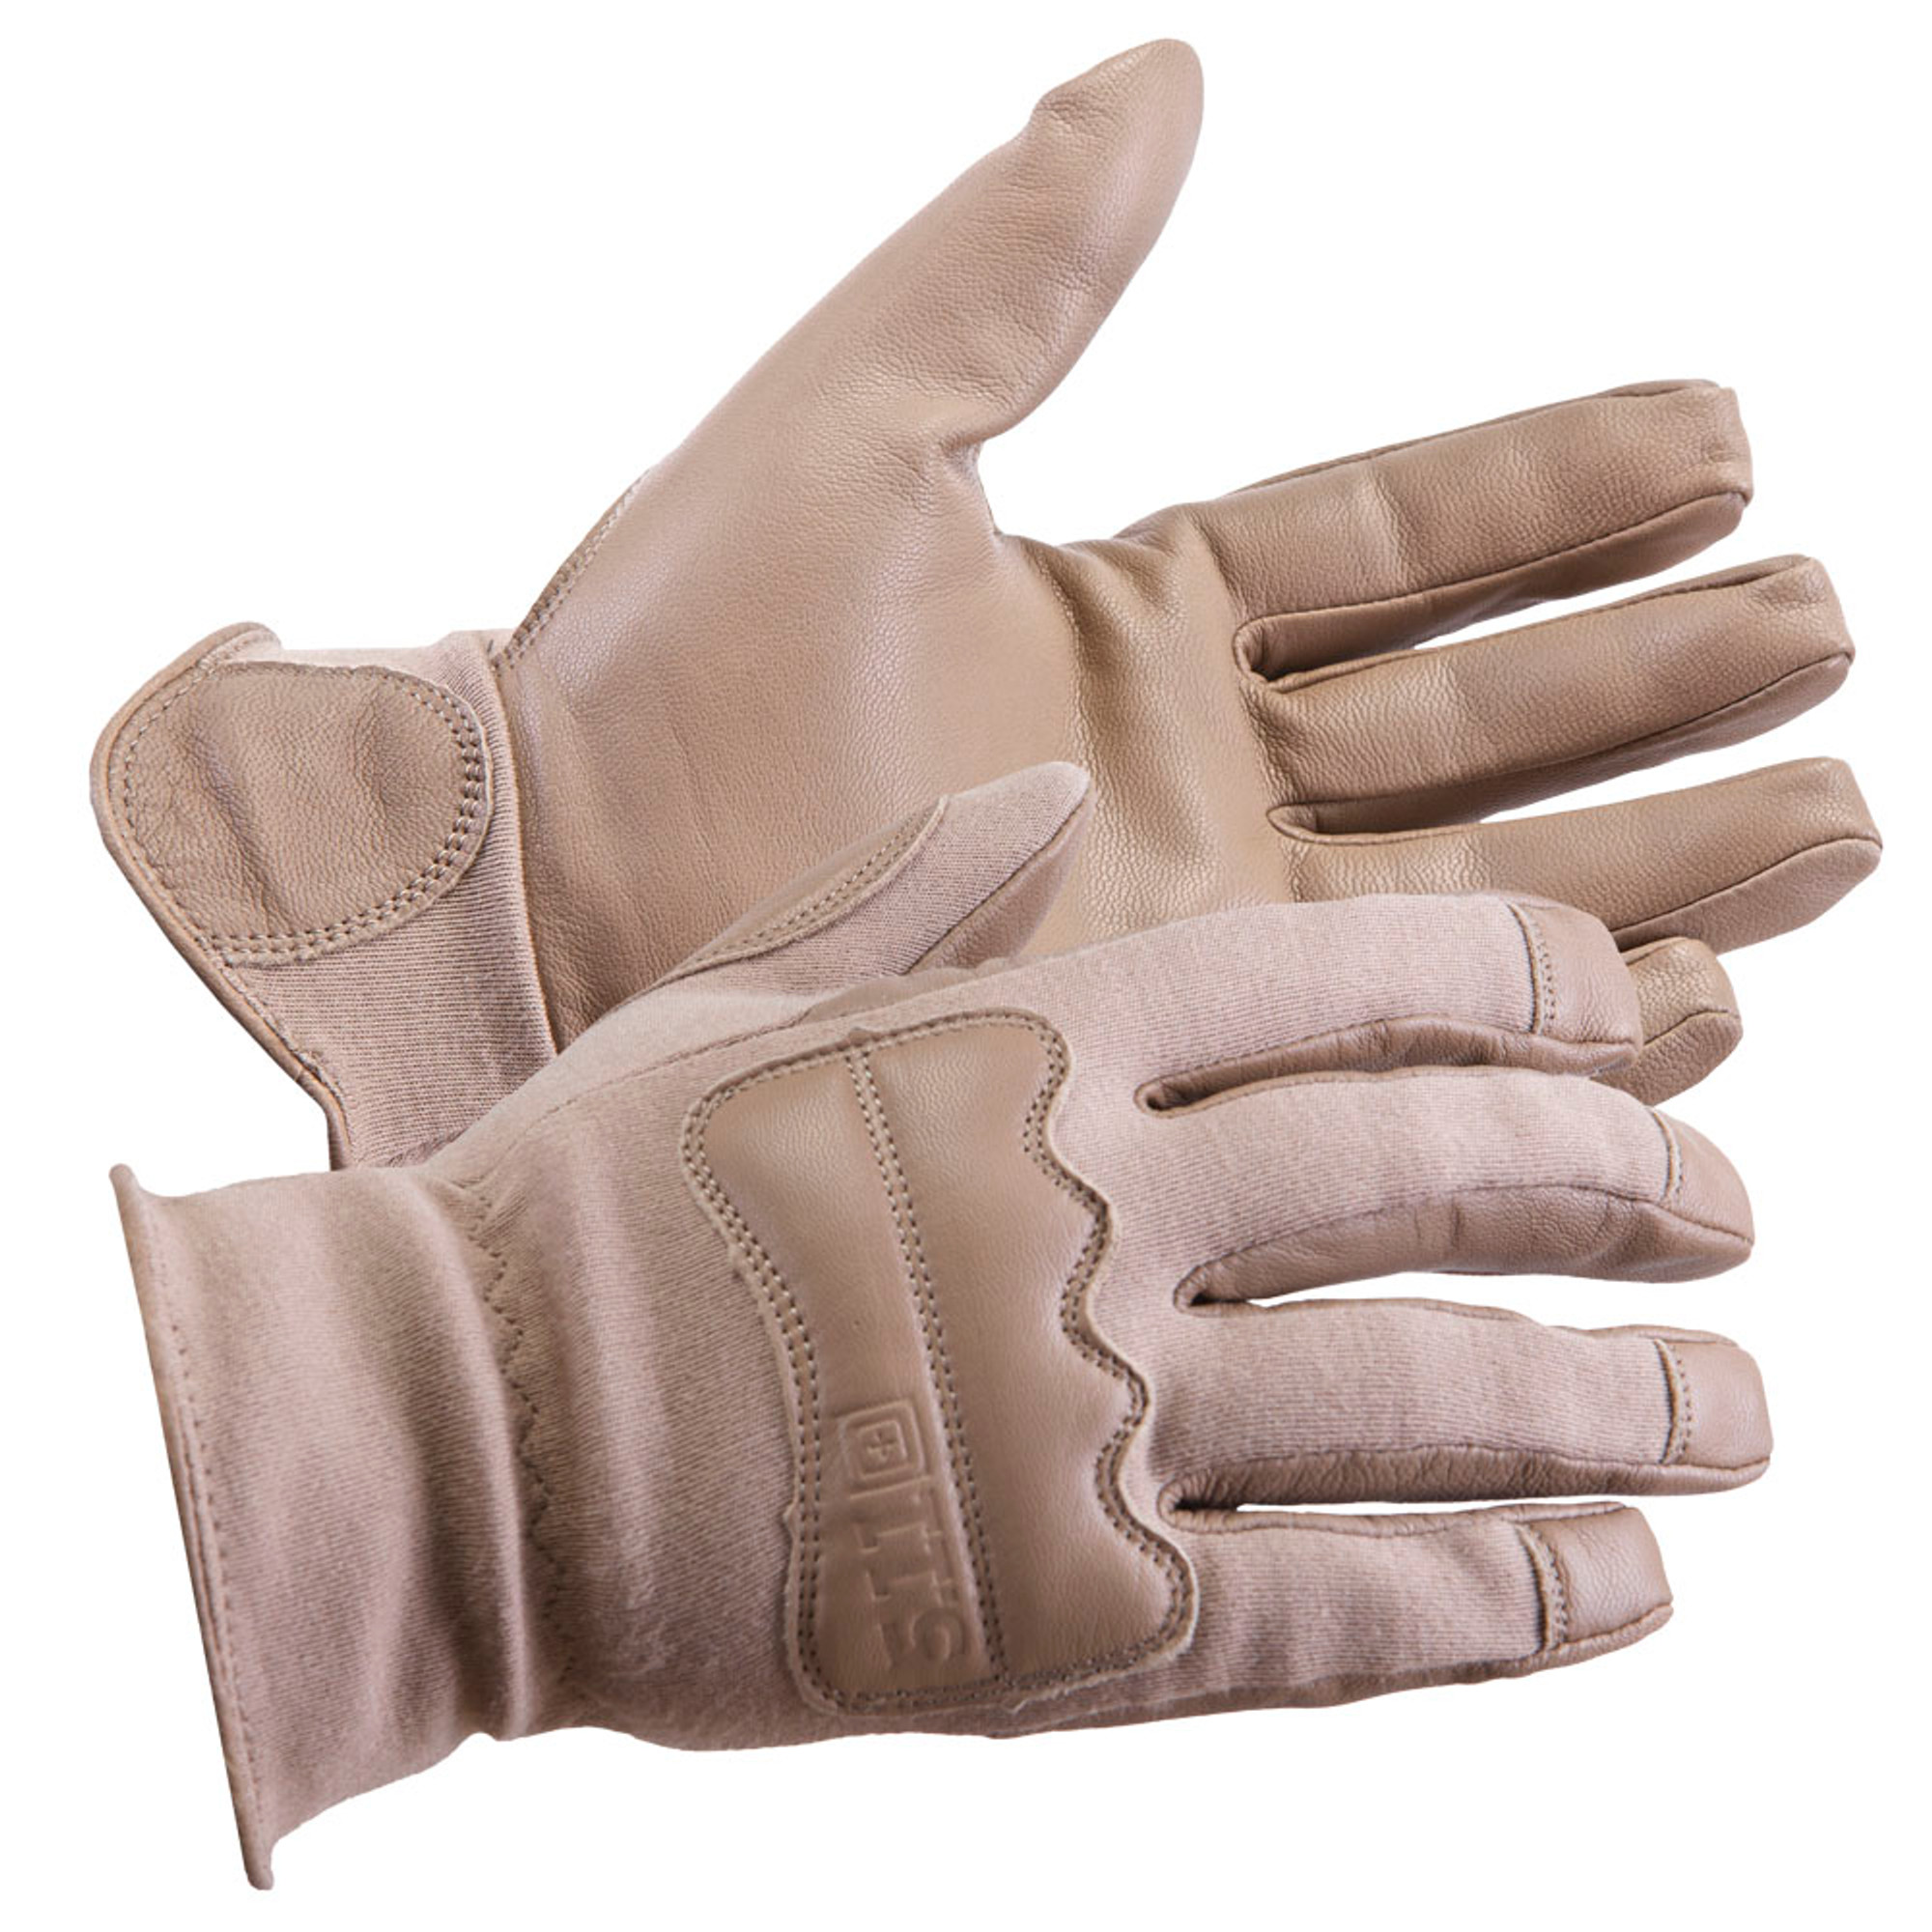 5.11 Tac NFO2 Gloves - Coyote Brown